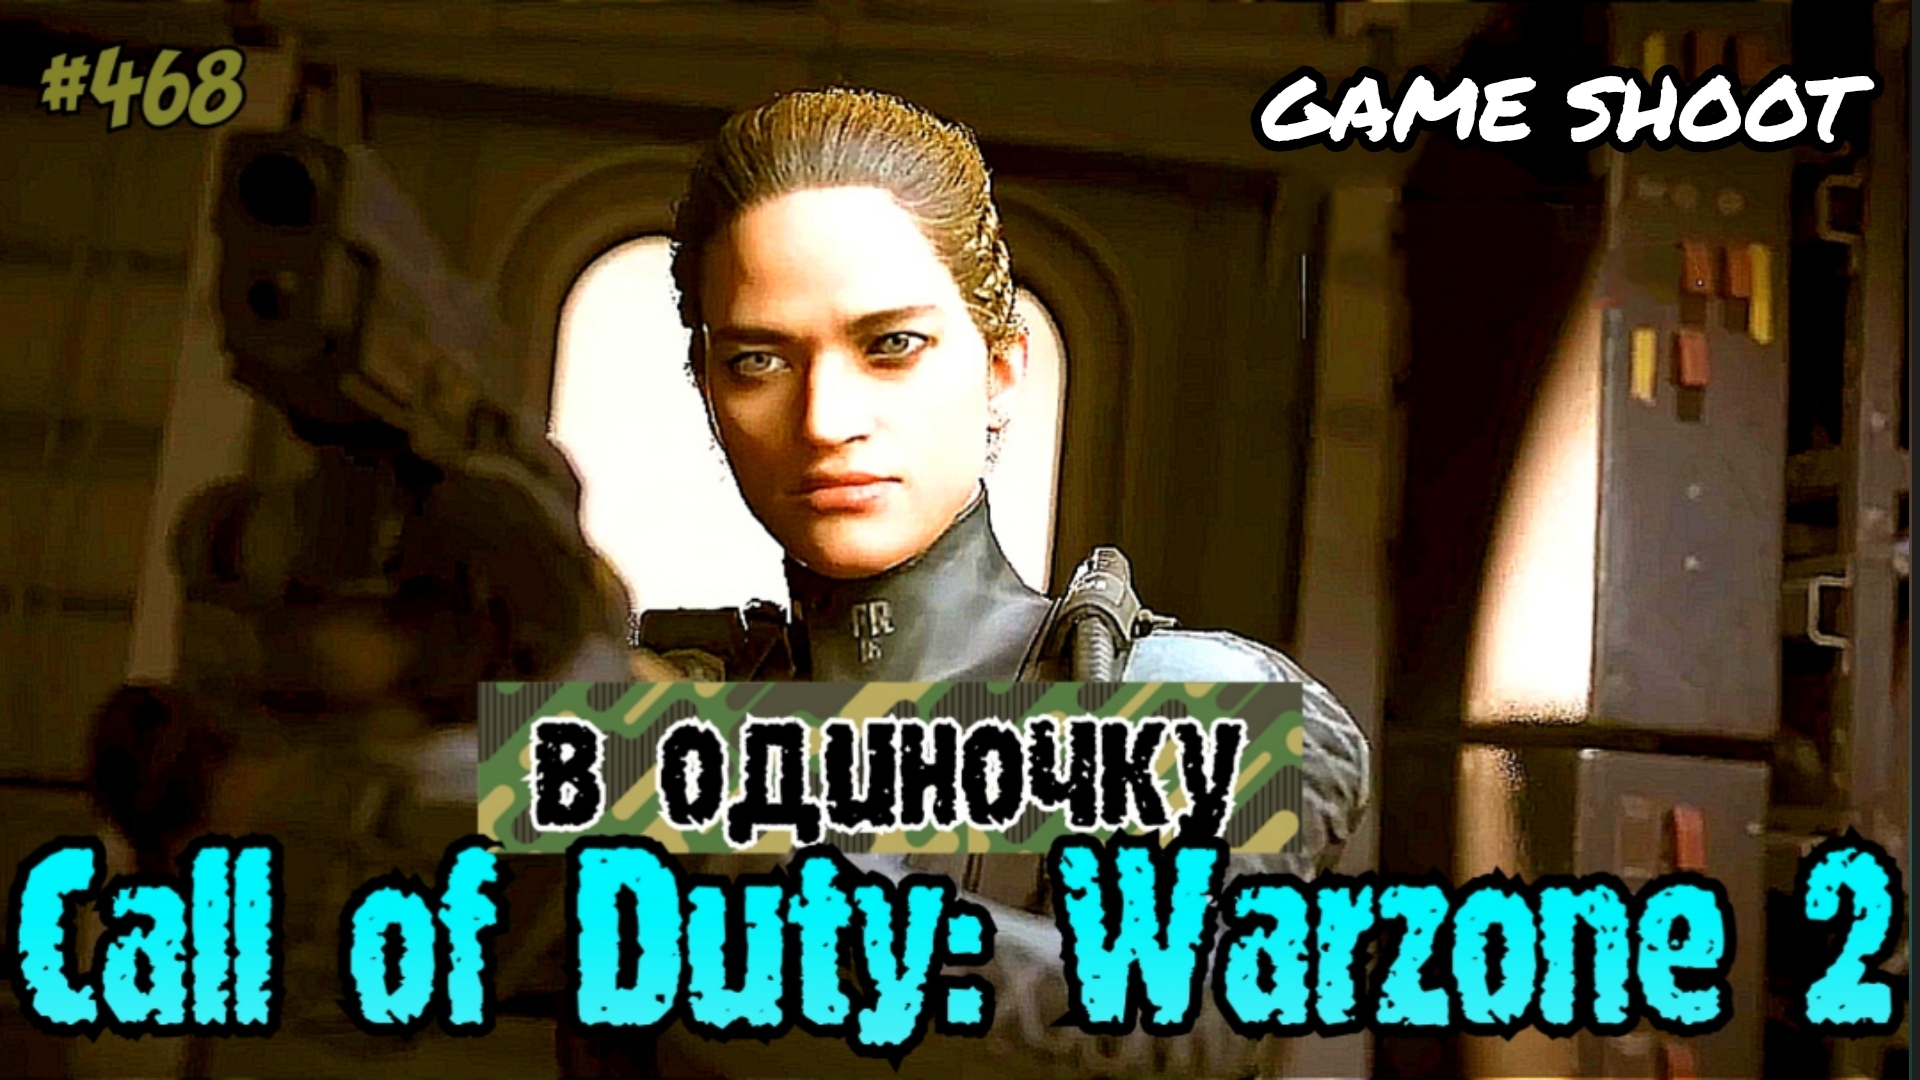 Call of Duty: Warzone 2 [в одиночку] #468 Game Shoot